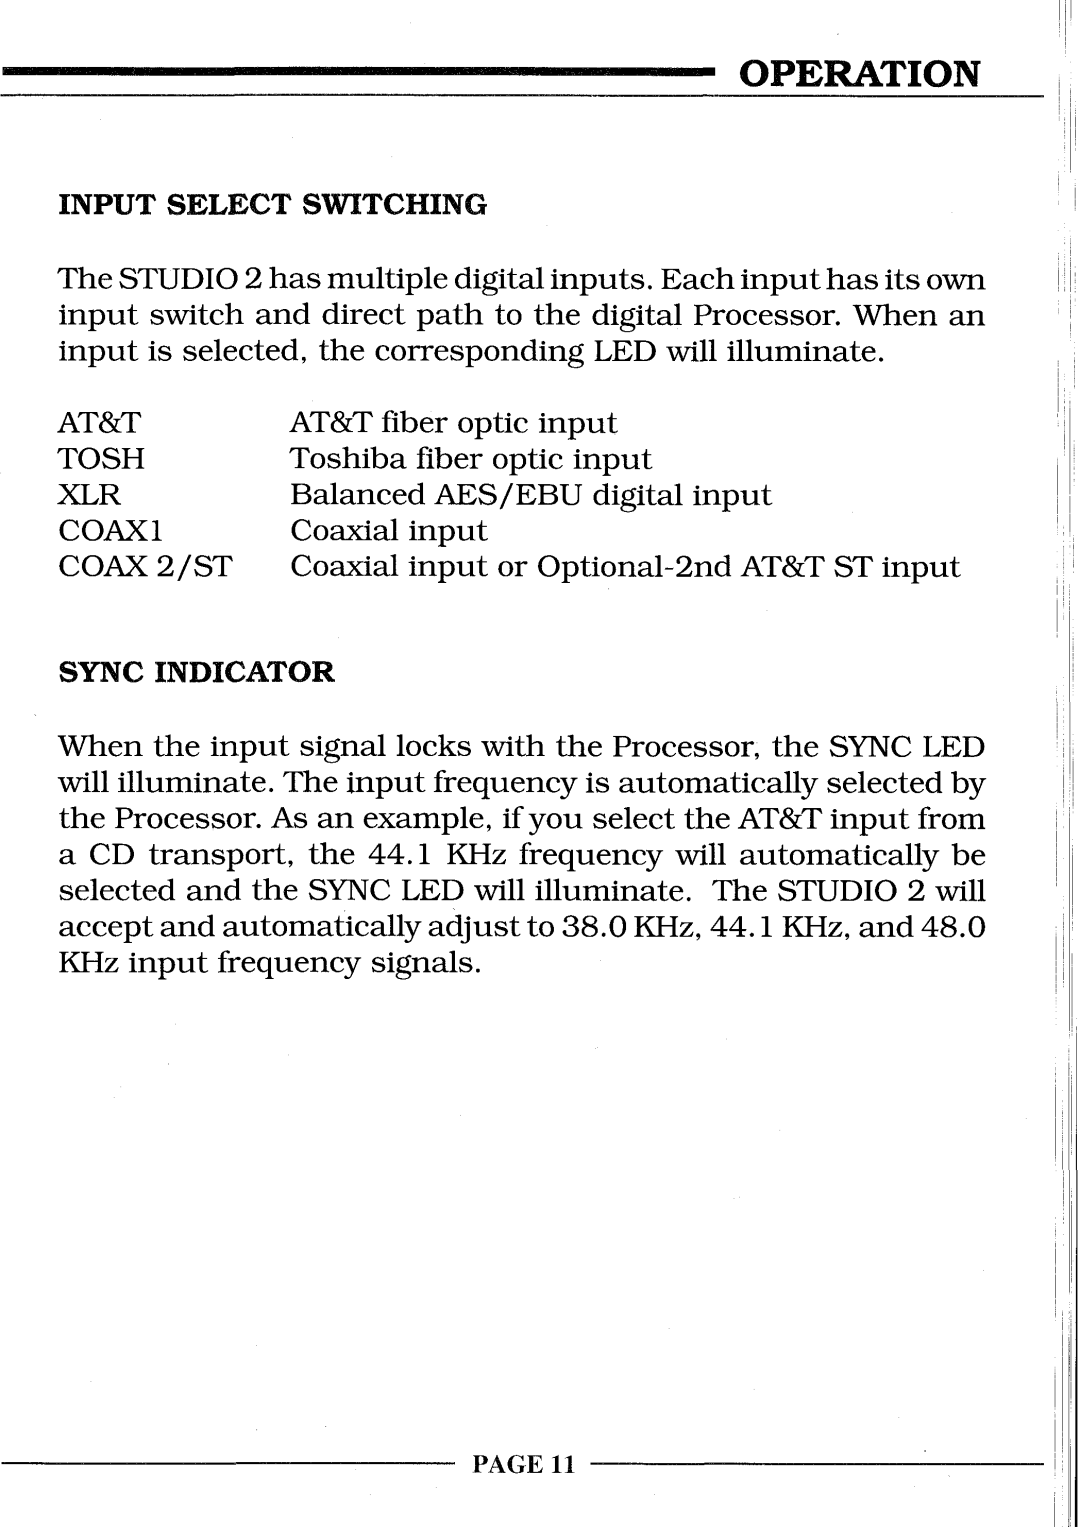 Krell Industries STUDIO 2 manual Operation, Input Select Switching, Sync Indicator 